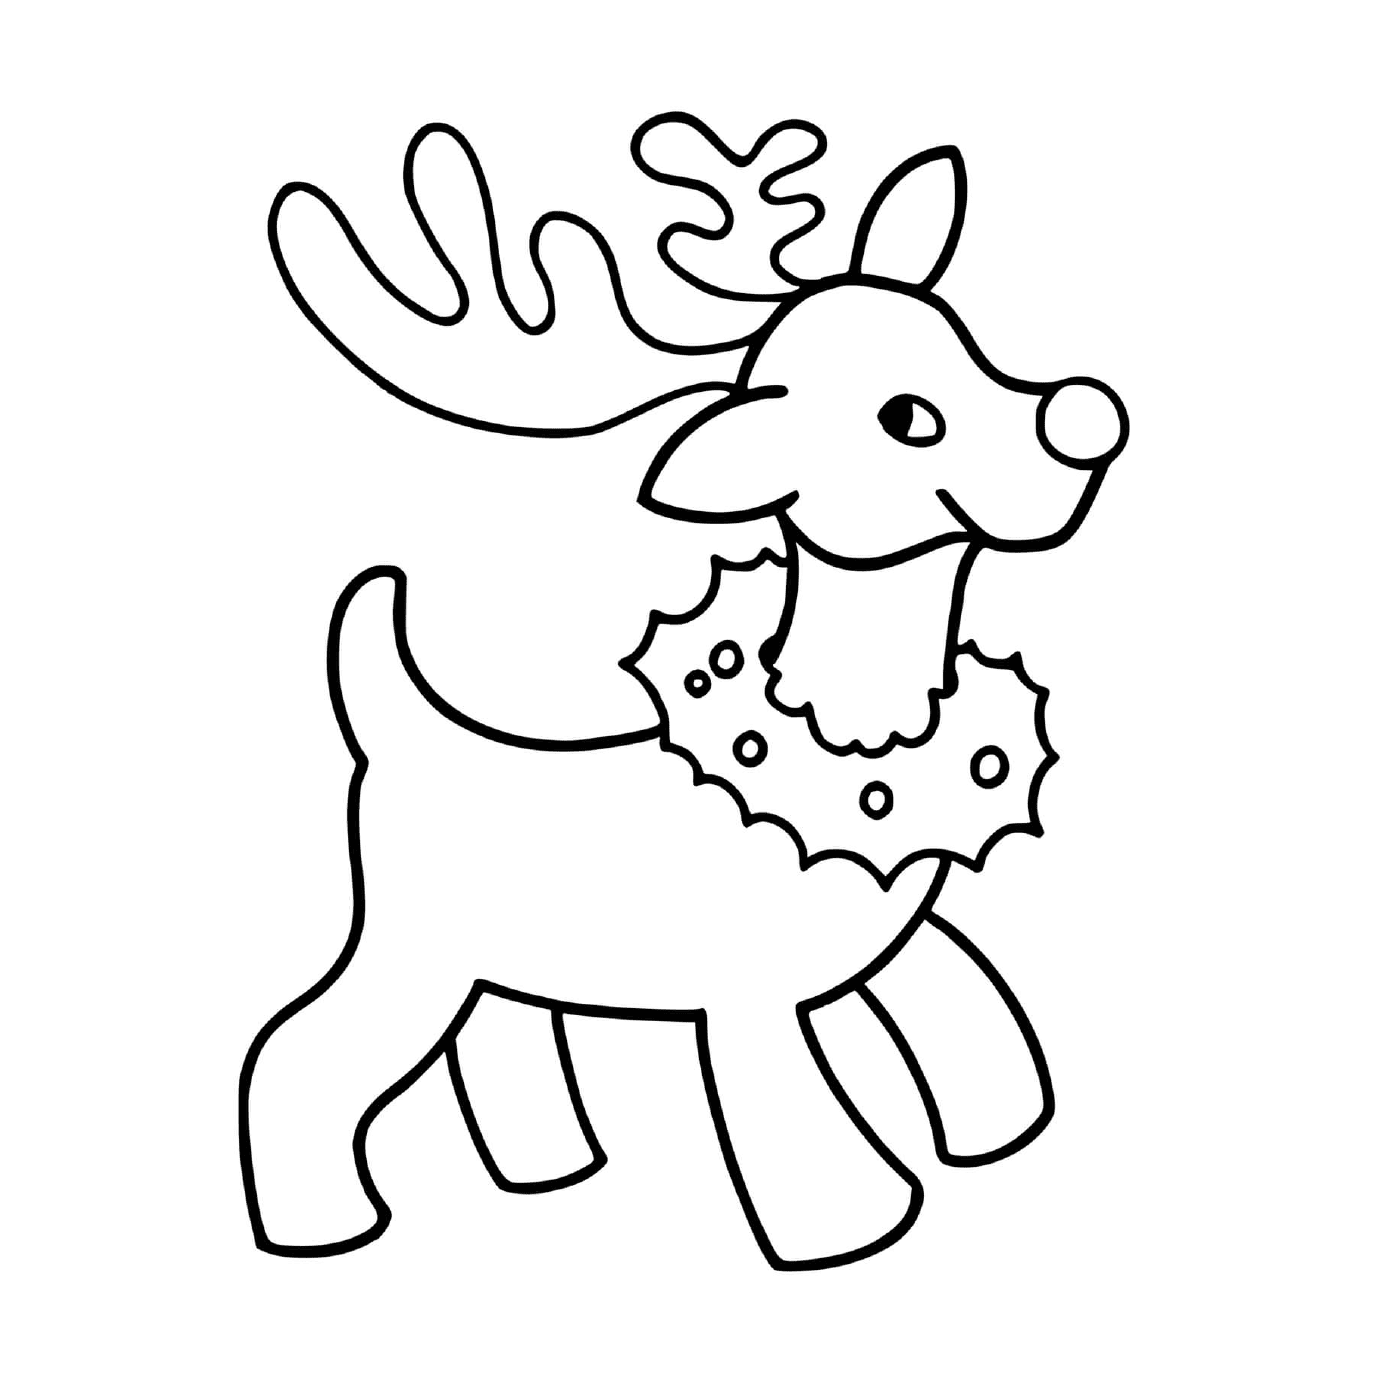  An easy to draw Christmas reindeer for kindergarten children 